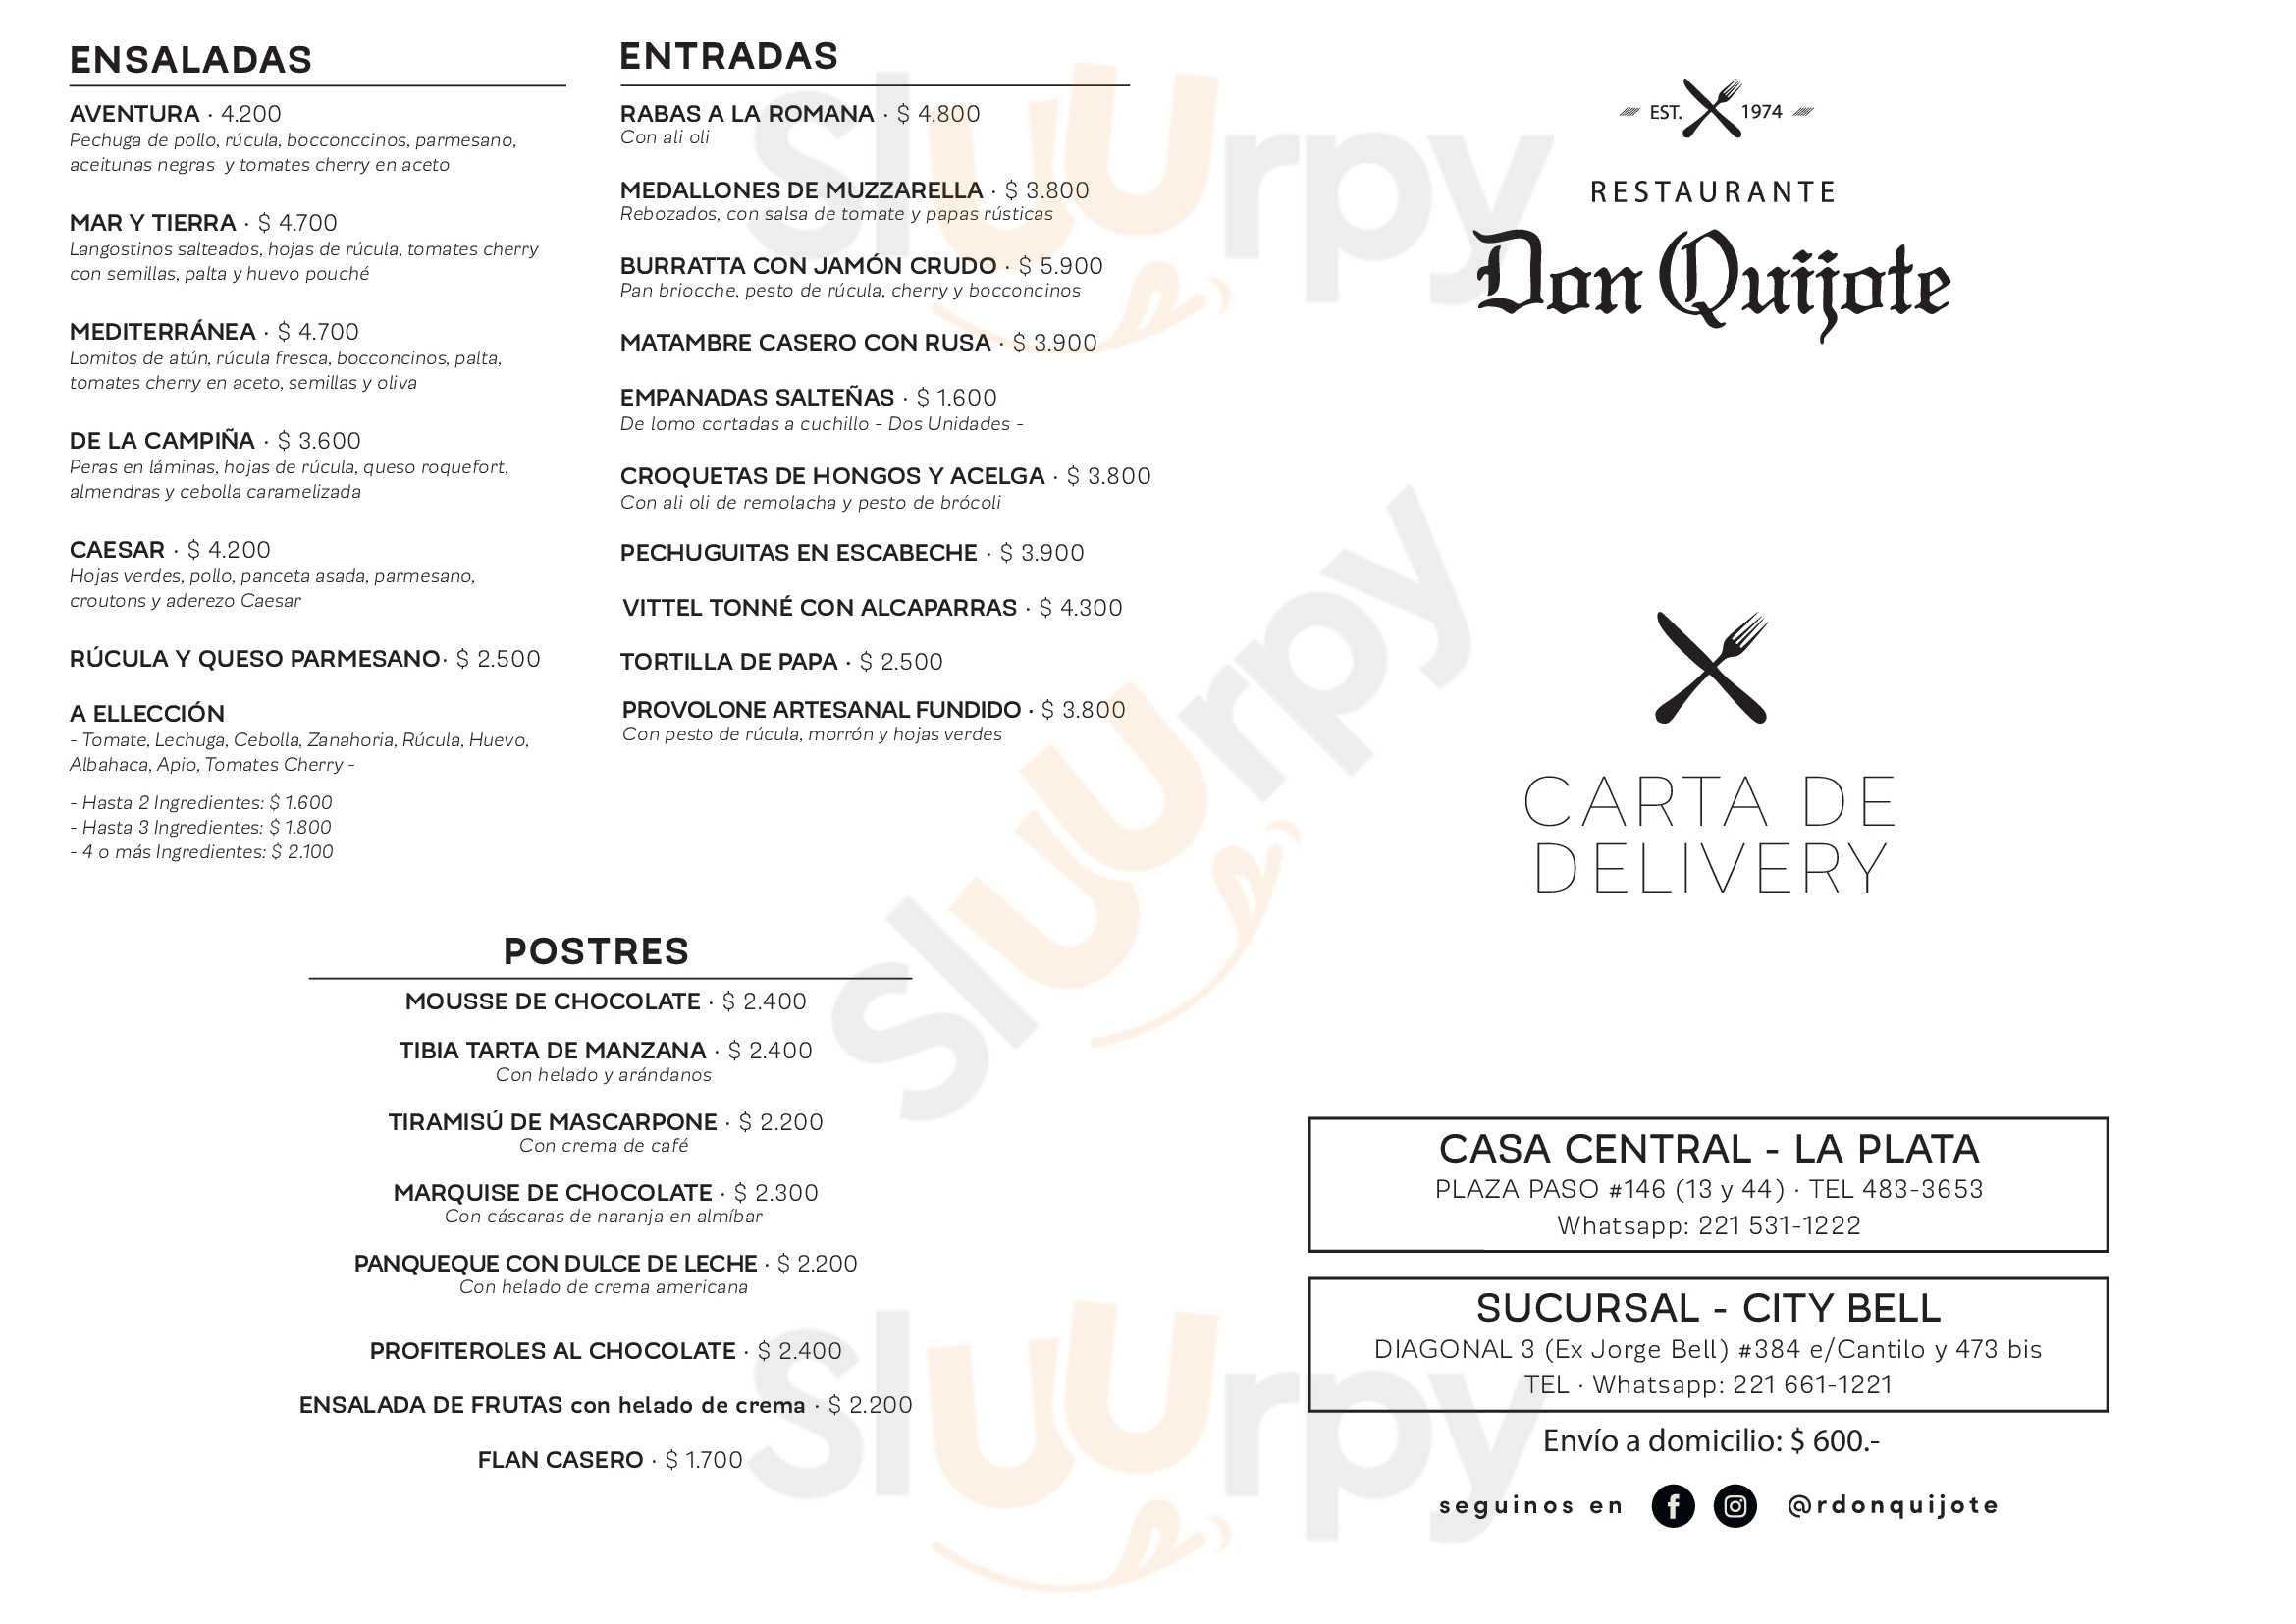 Restaurante Don Quijote La Plata Menu - 1